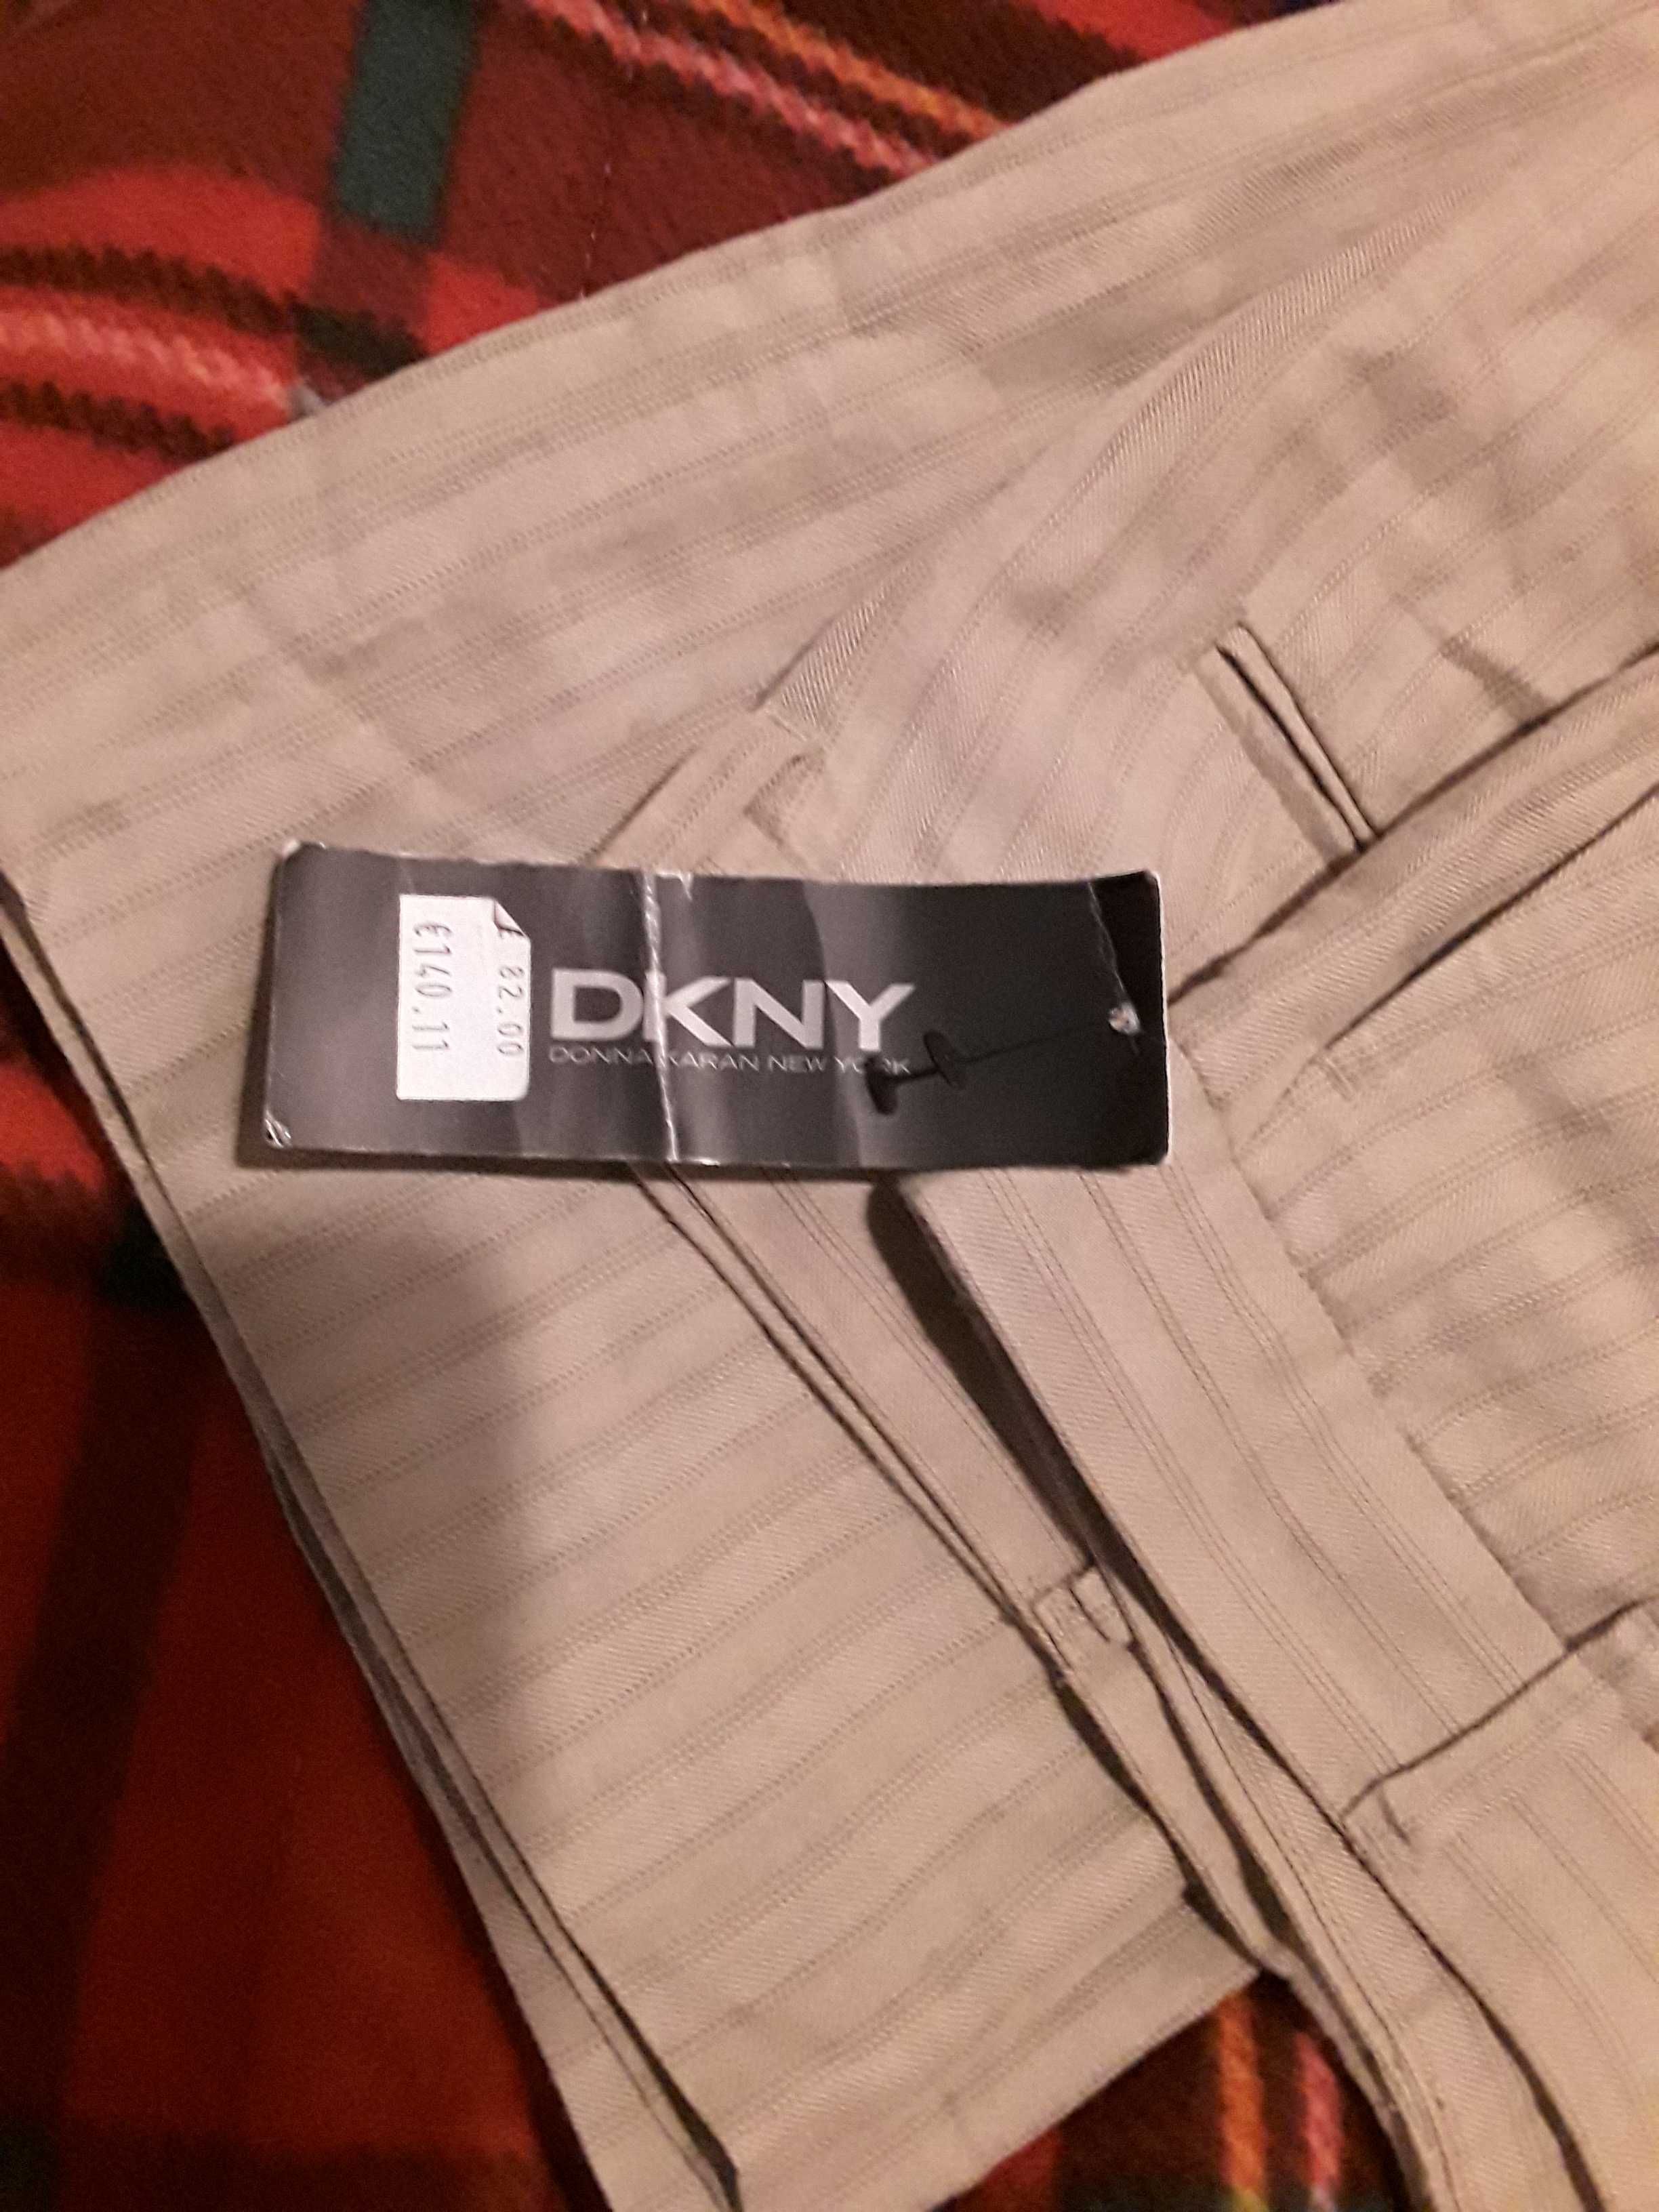 Calças DKNY novas